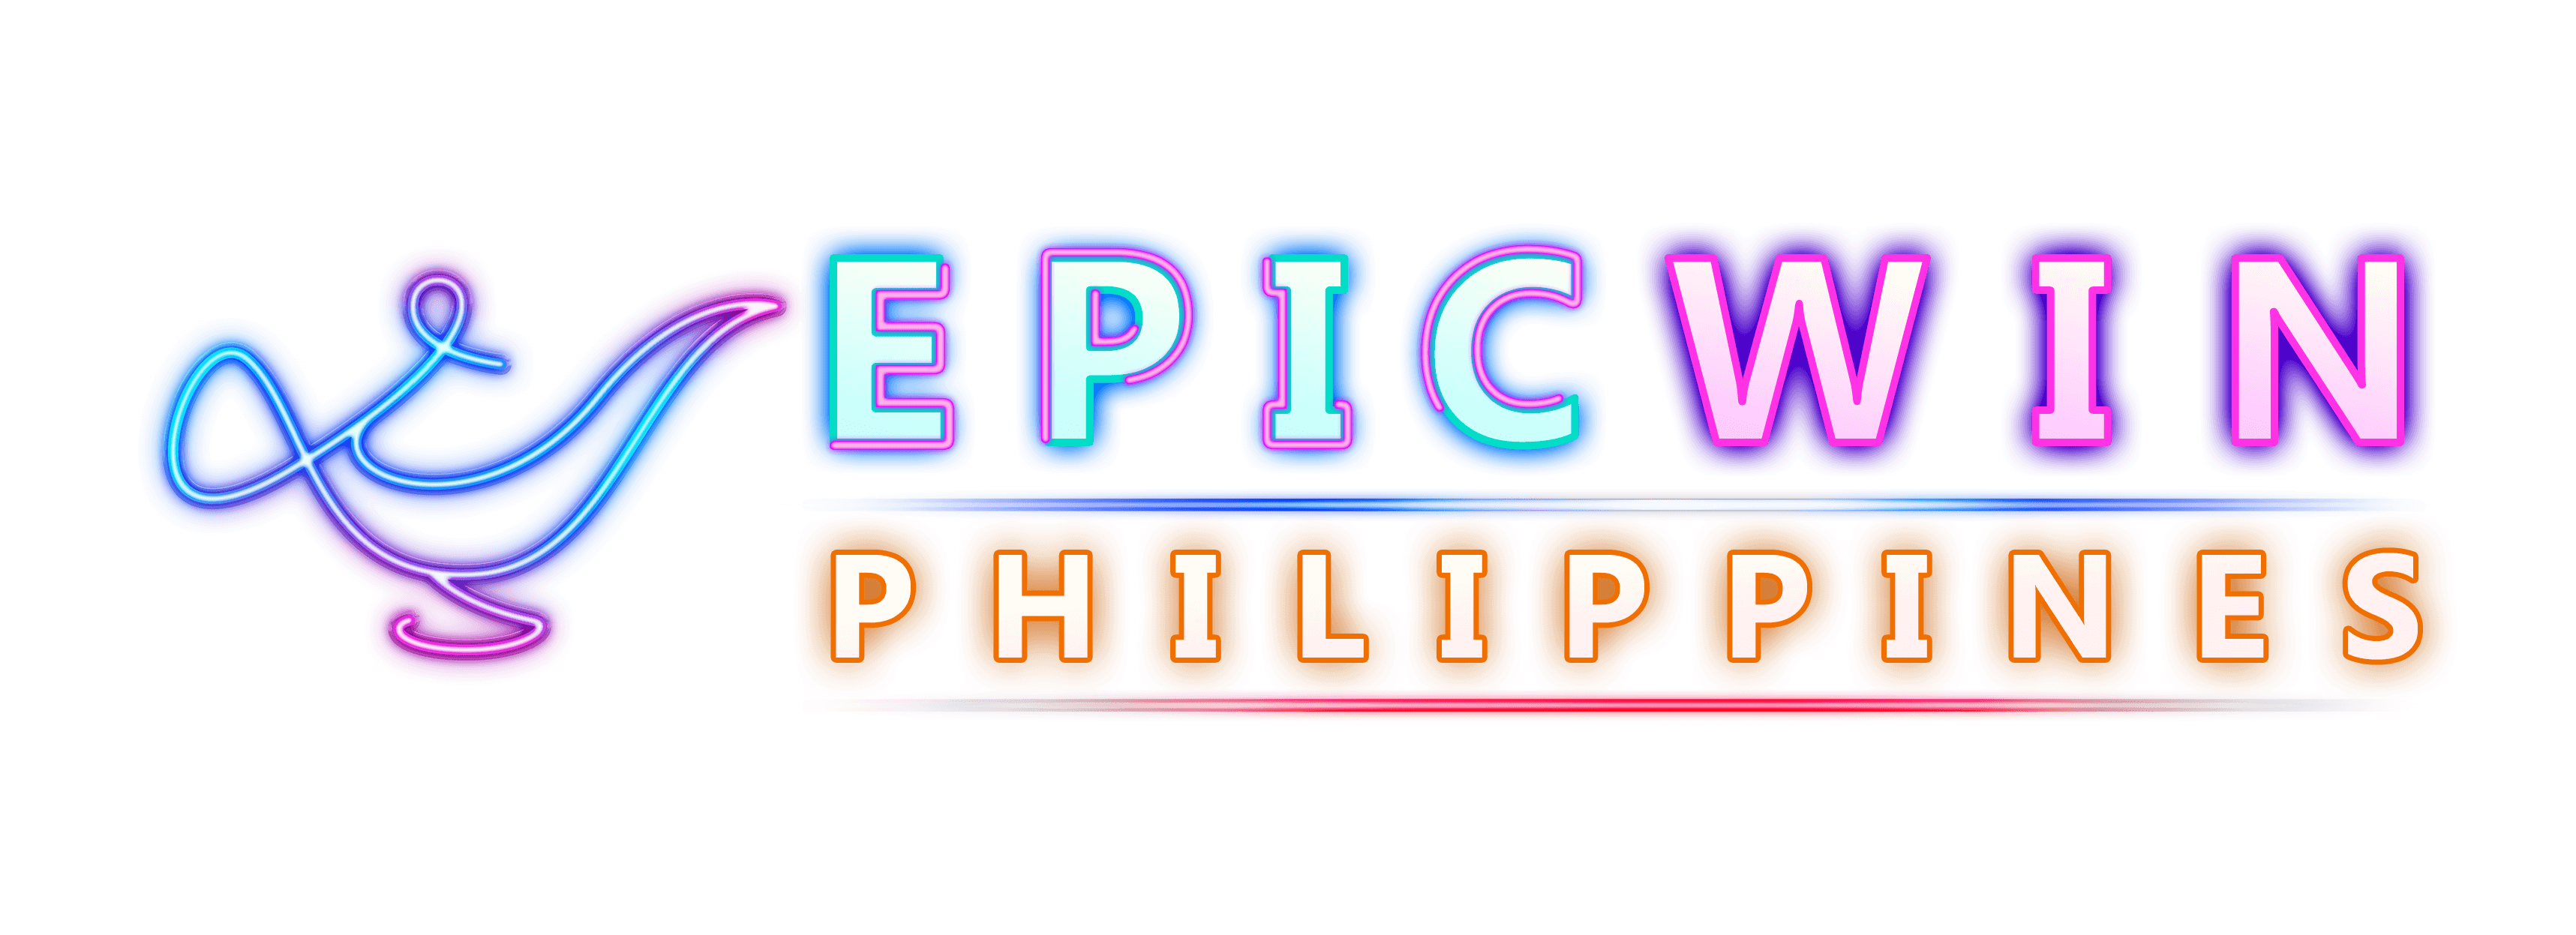 epicwin Philippines